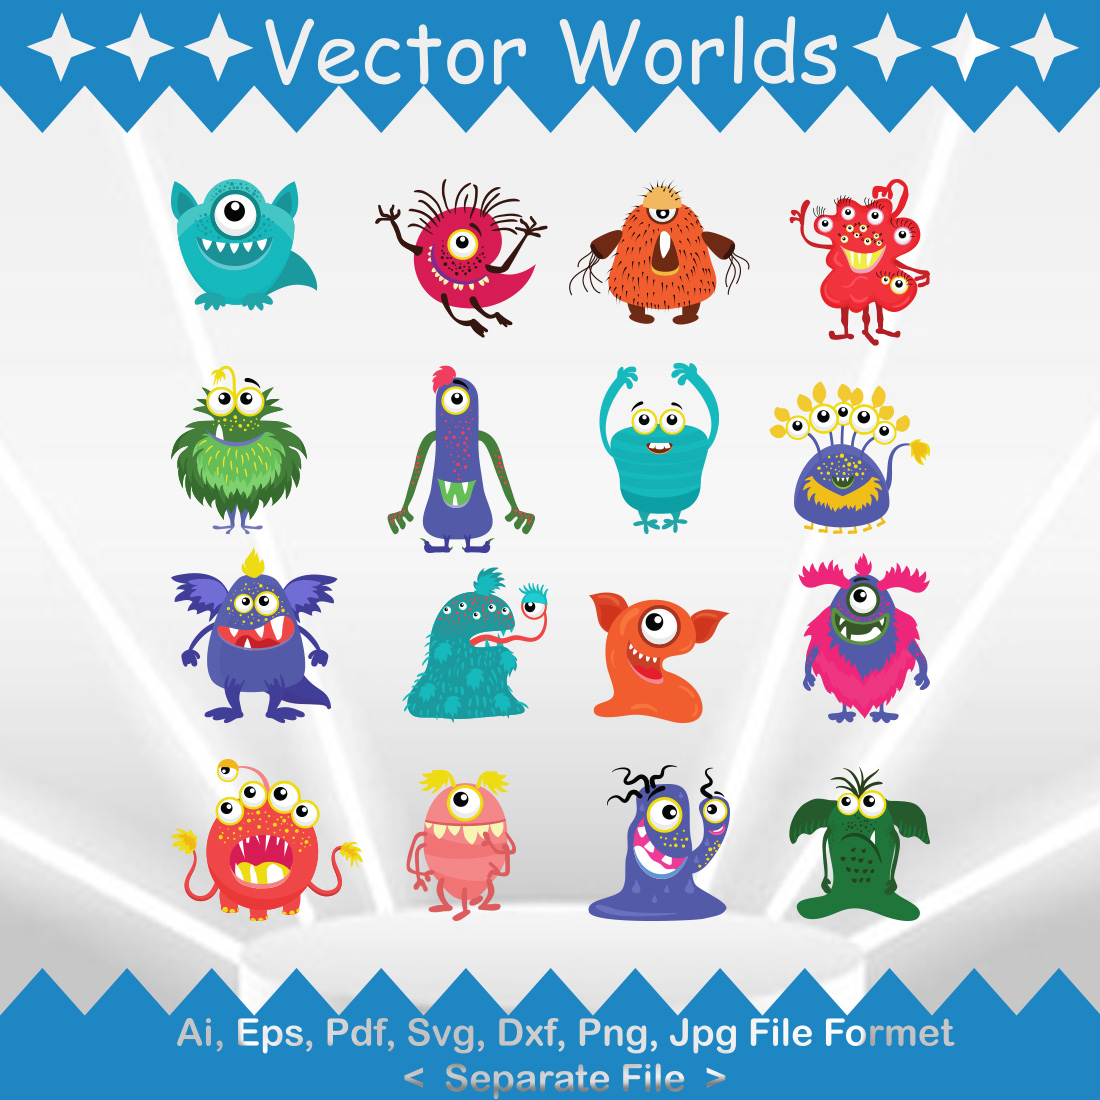 Monster Inc SVG Vector Design cover image.